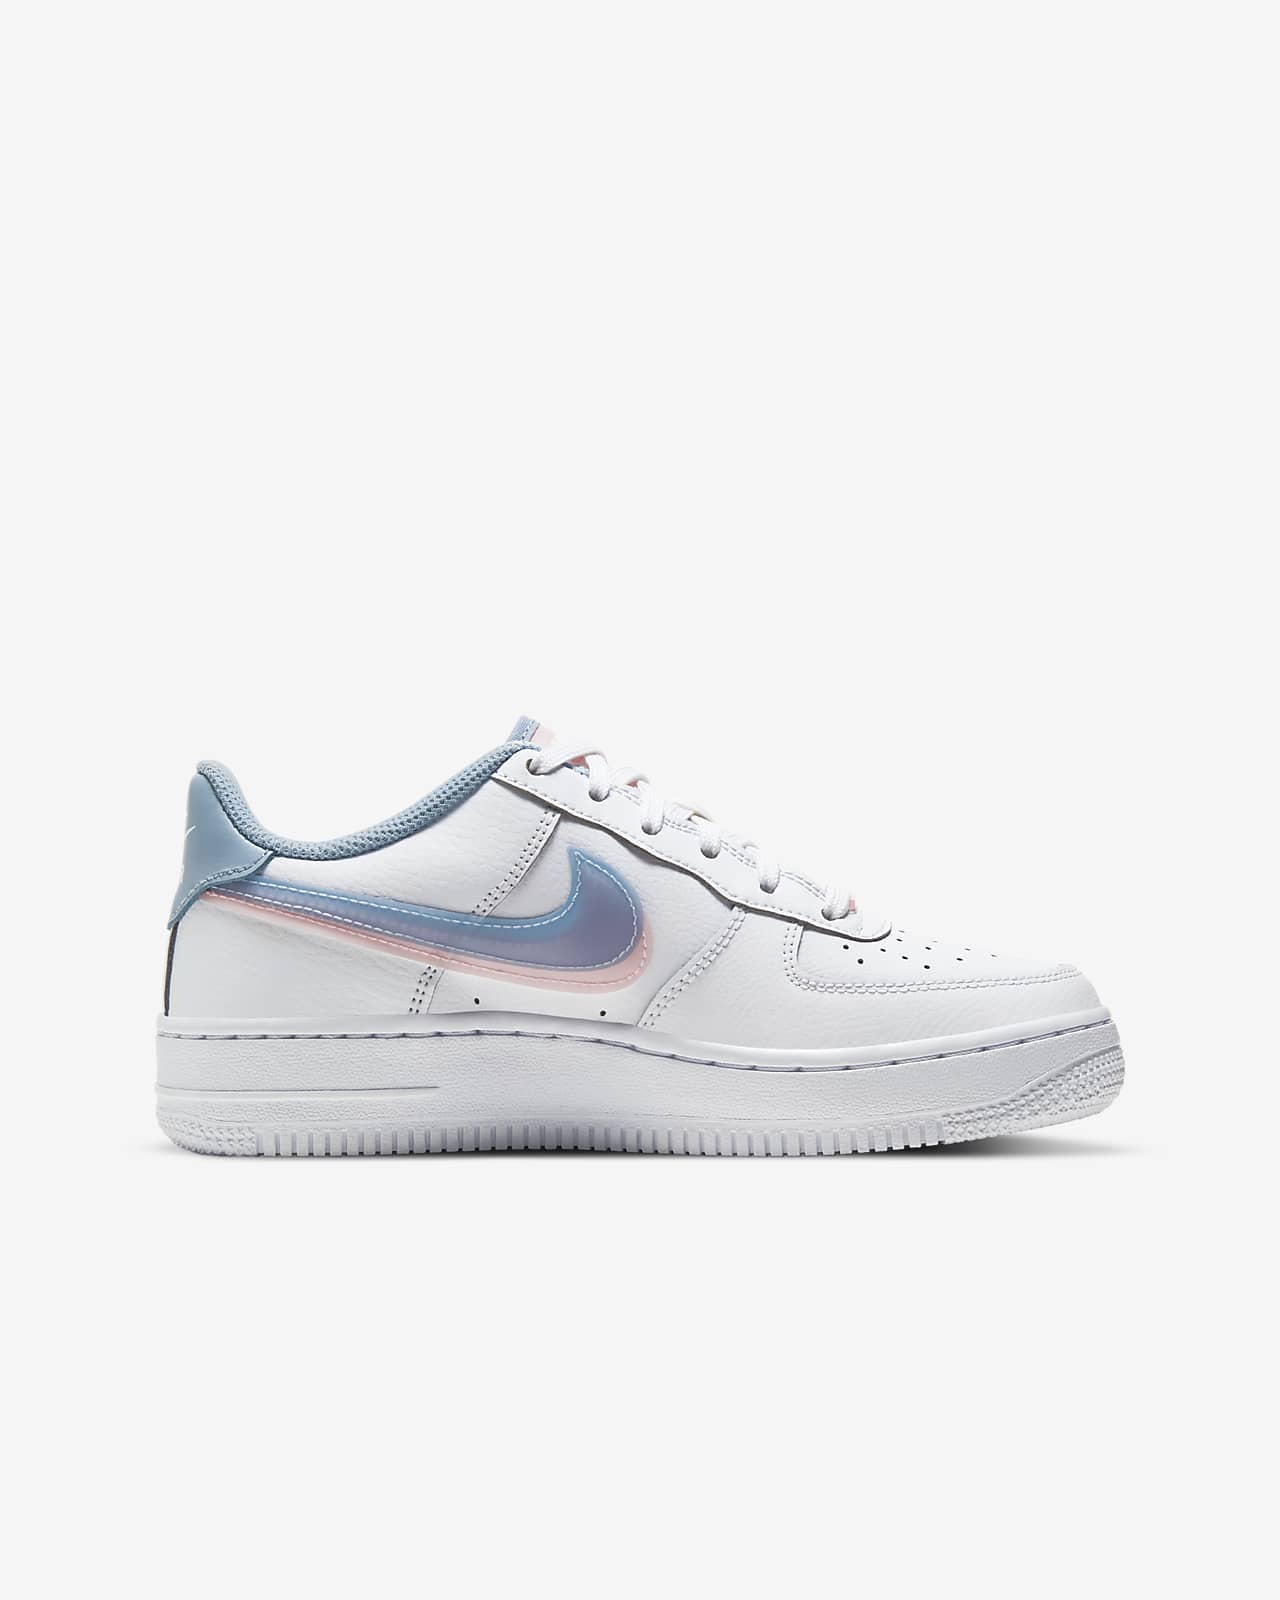 Nike Air Force 1 LV8 Schuh für ältere 